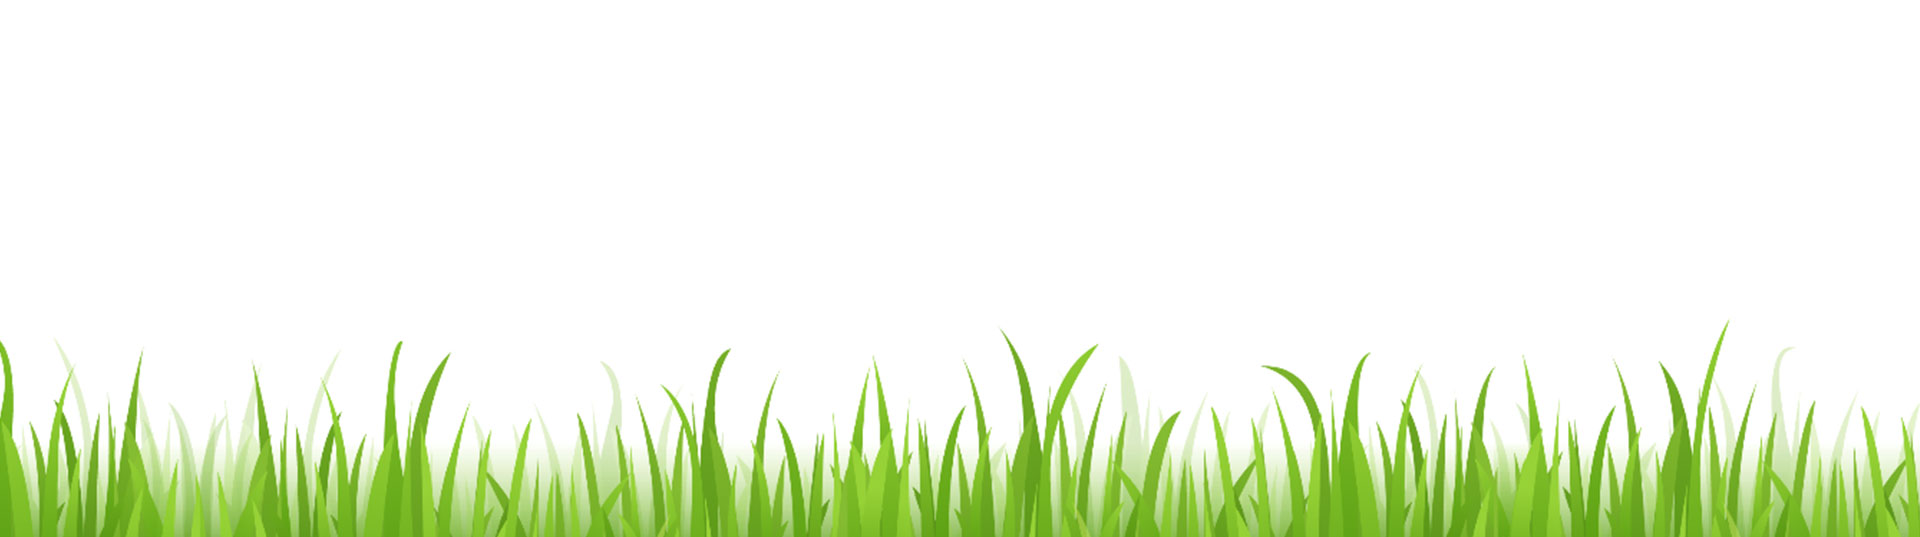 Grass Background Image